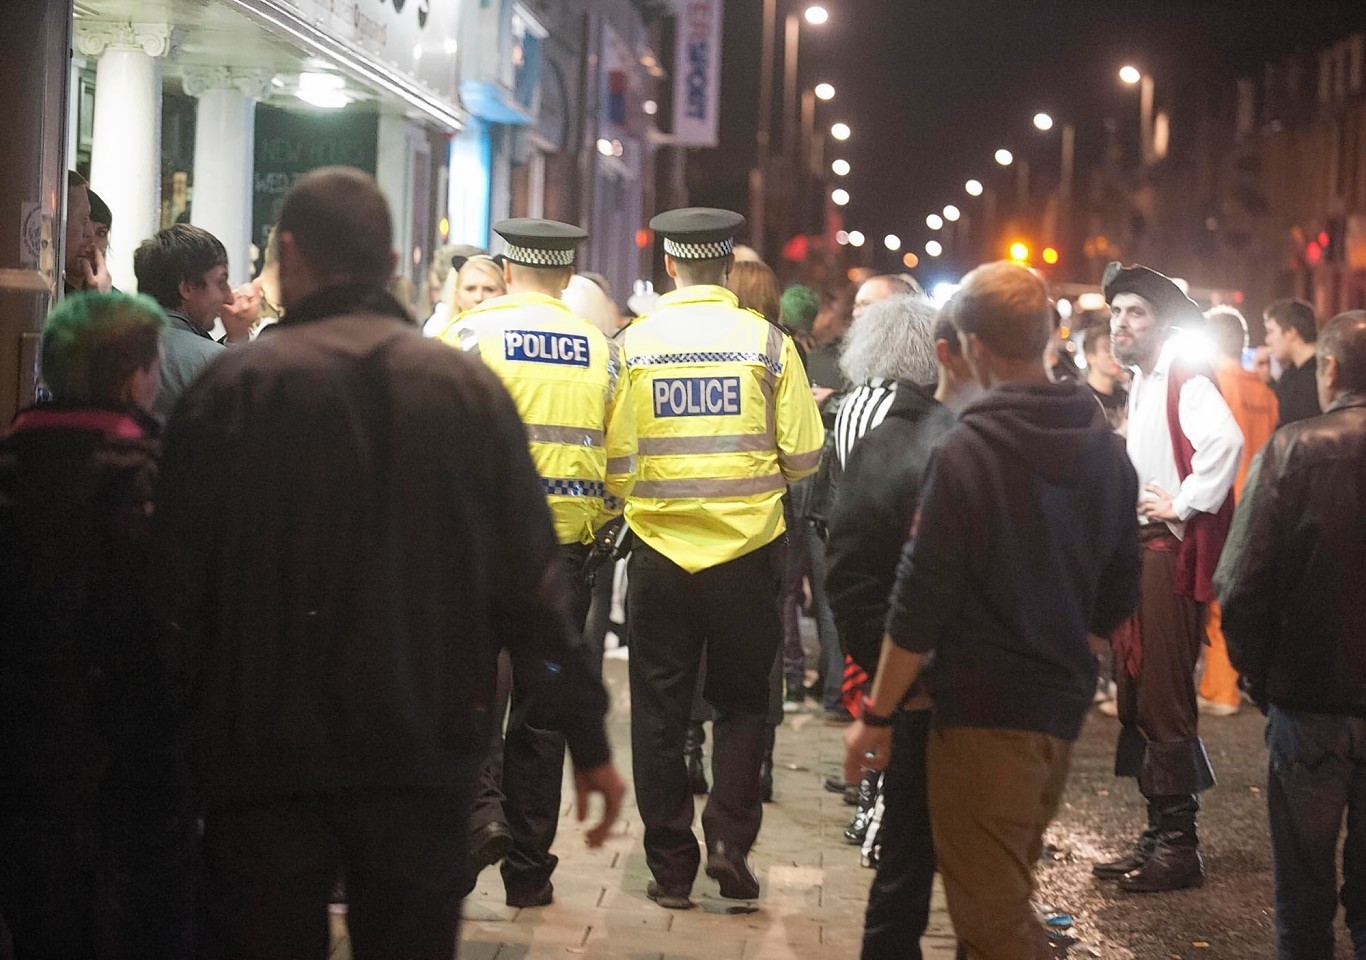 Police patrol Peterhead on one of their busiest nights of the year, 